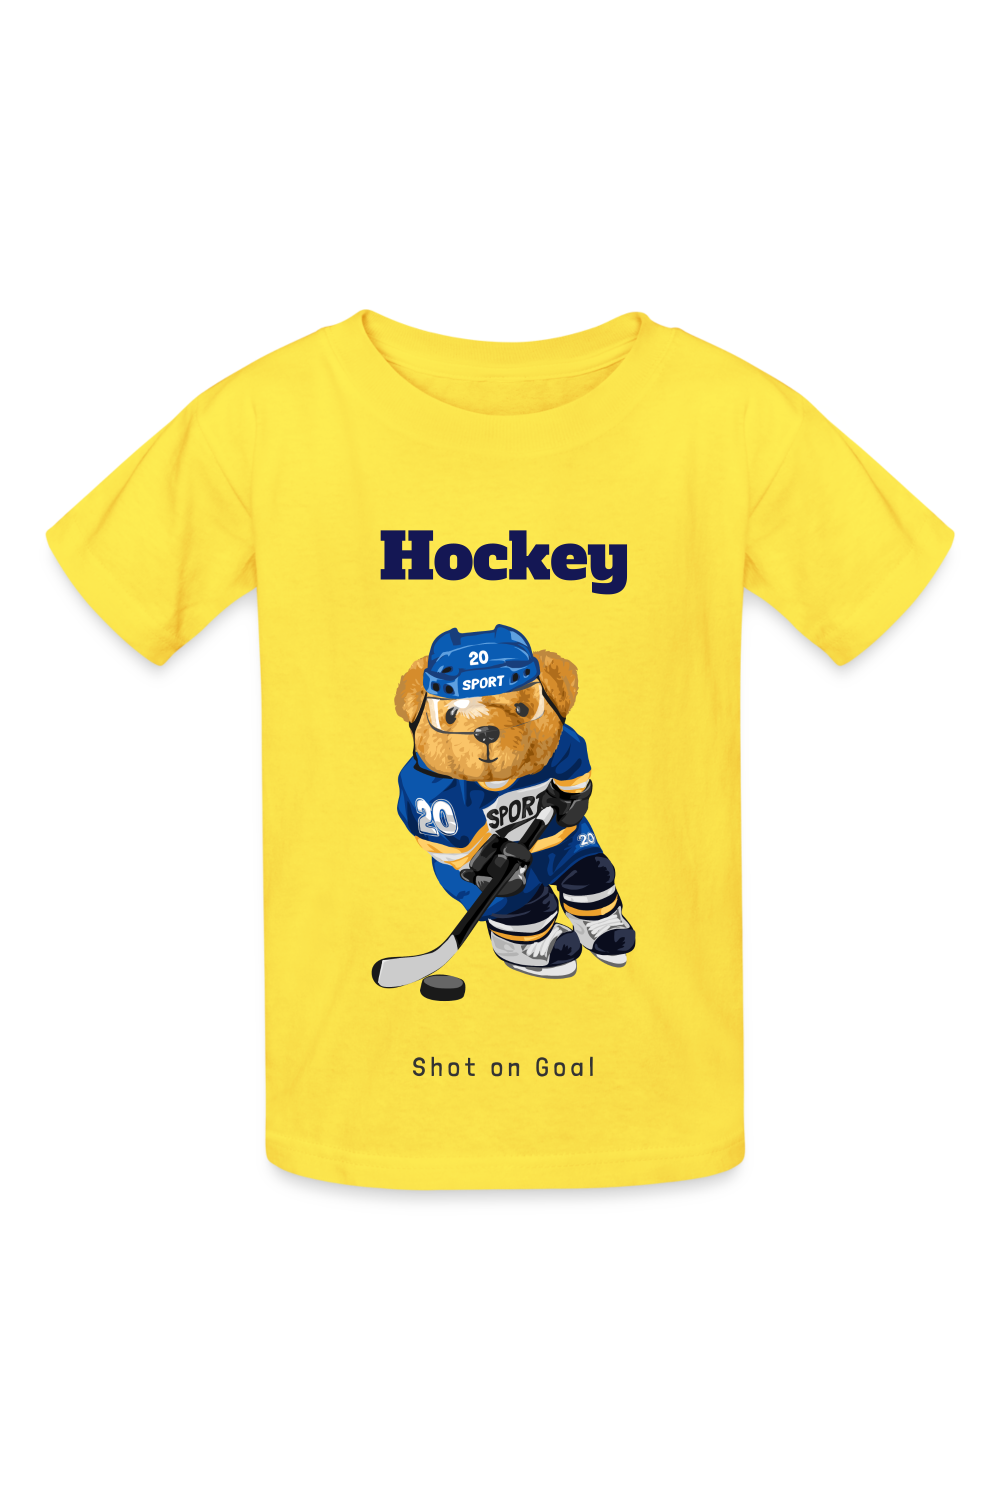 Boys Shot on Goal Hockey Short Sleeve Tee Shirt - yellow - NicholesGifts.online